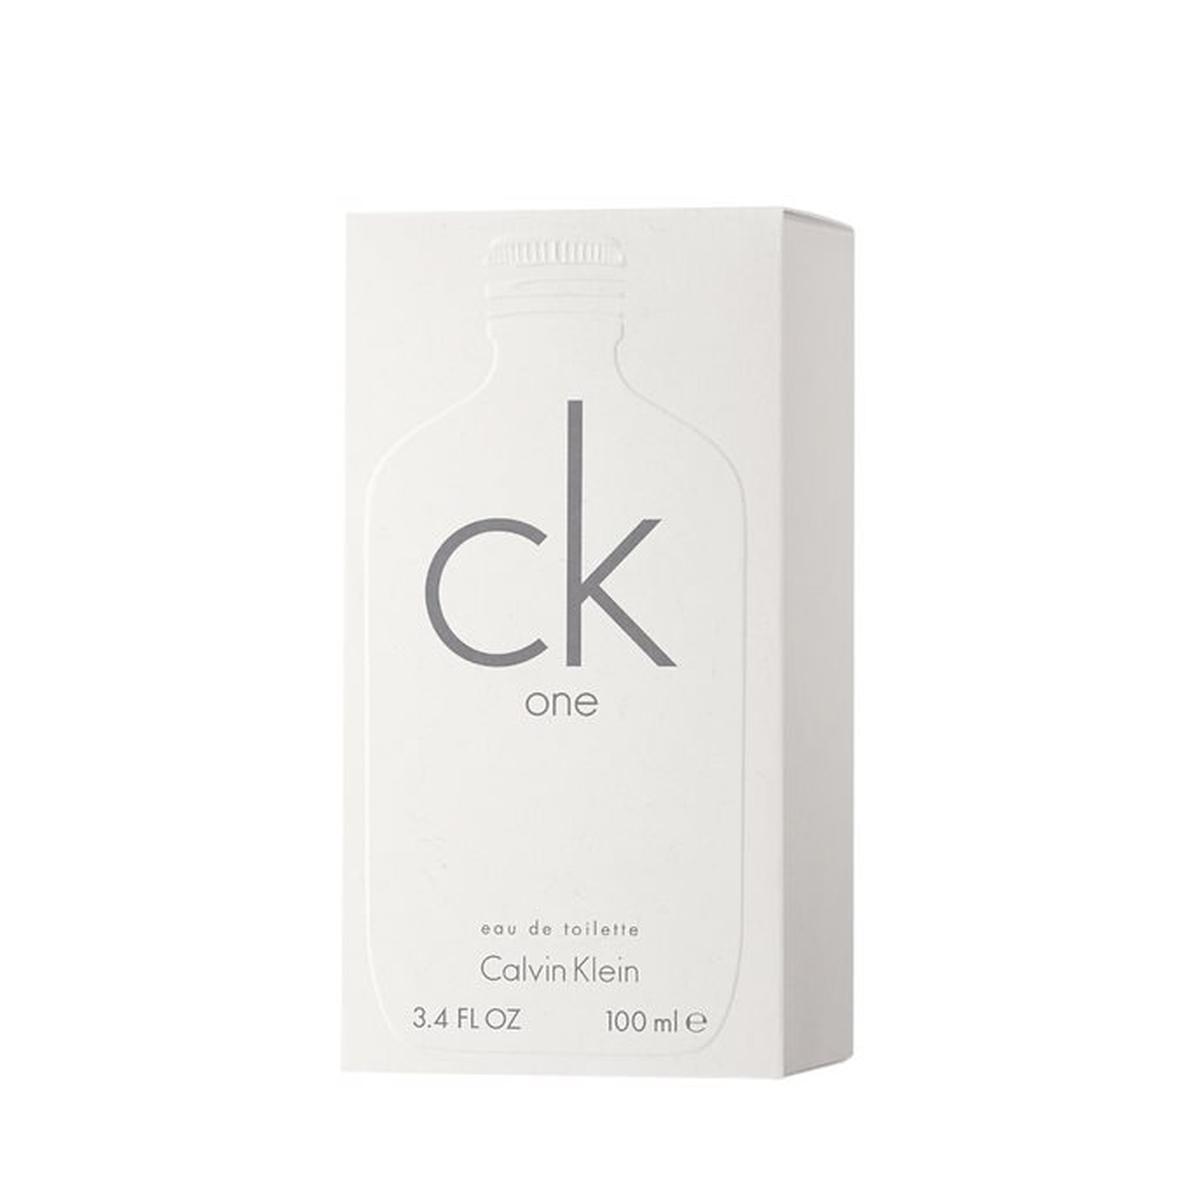 CK one 100 ml